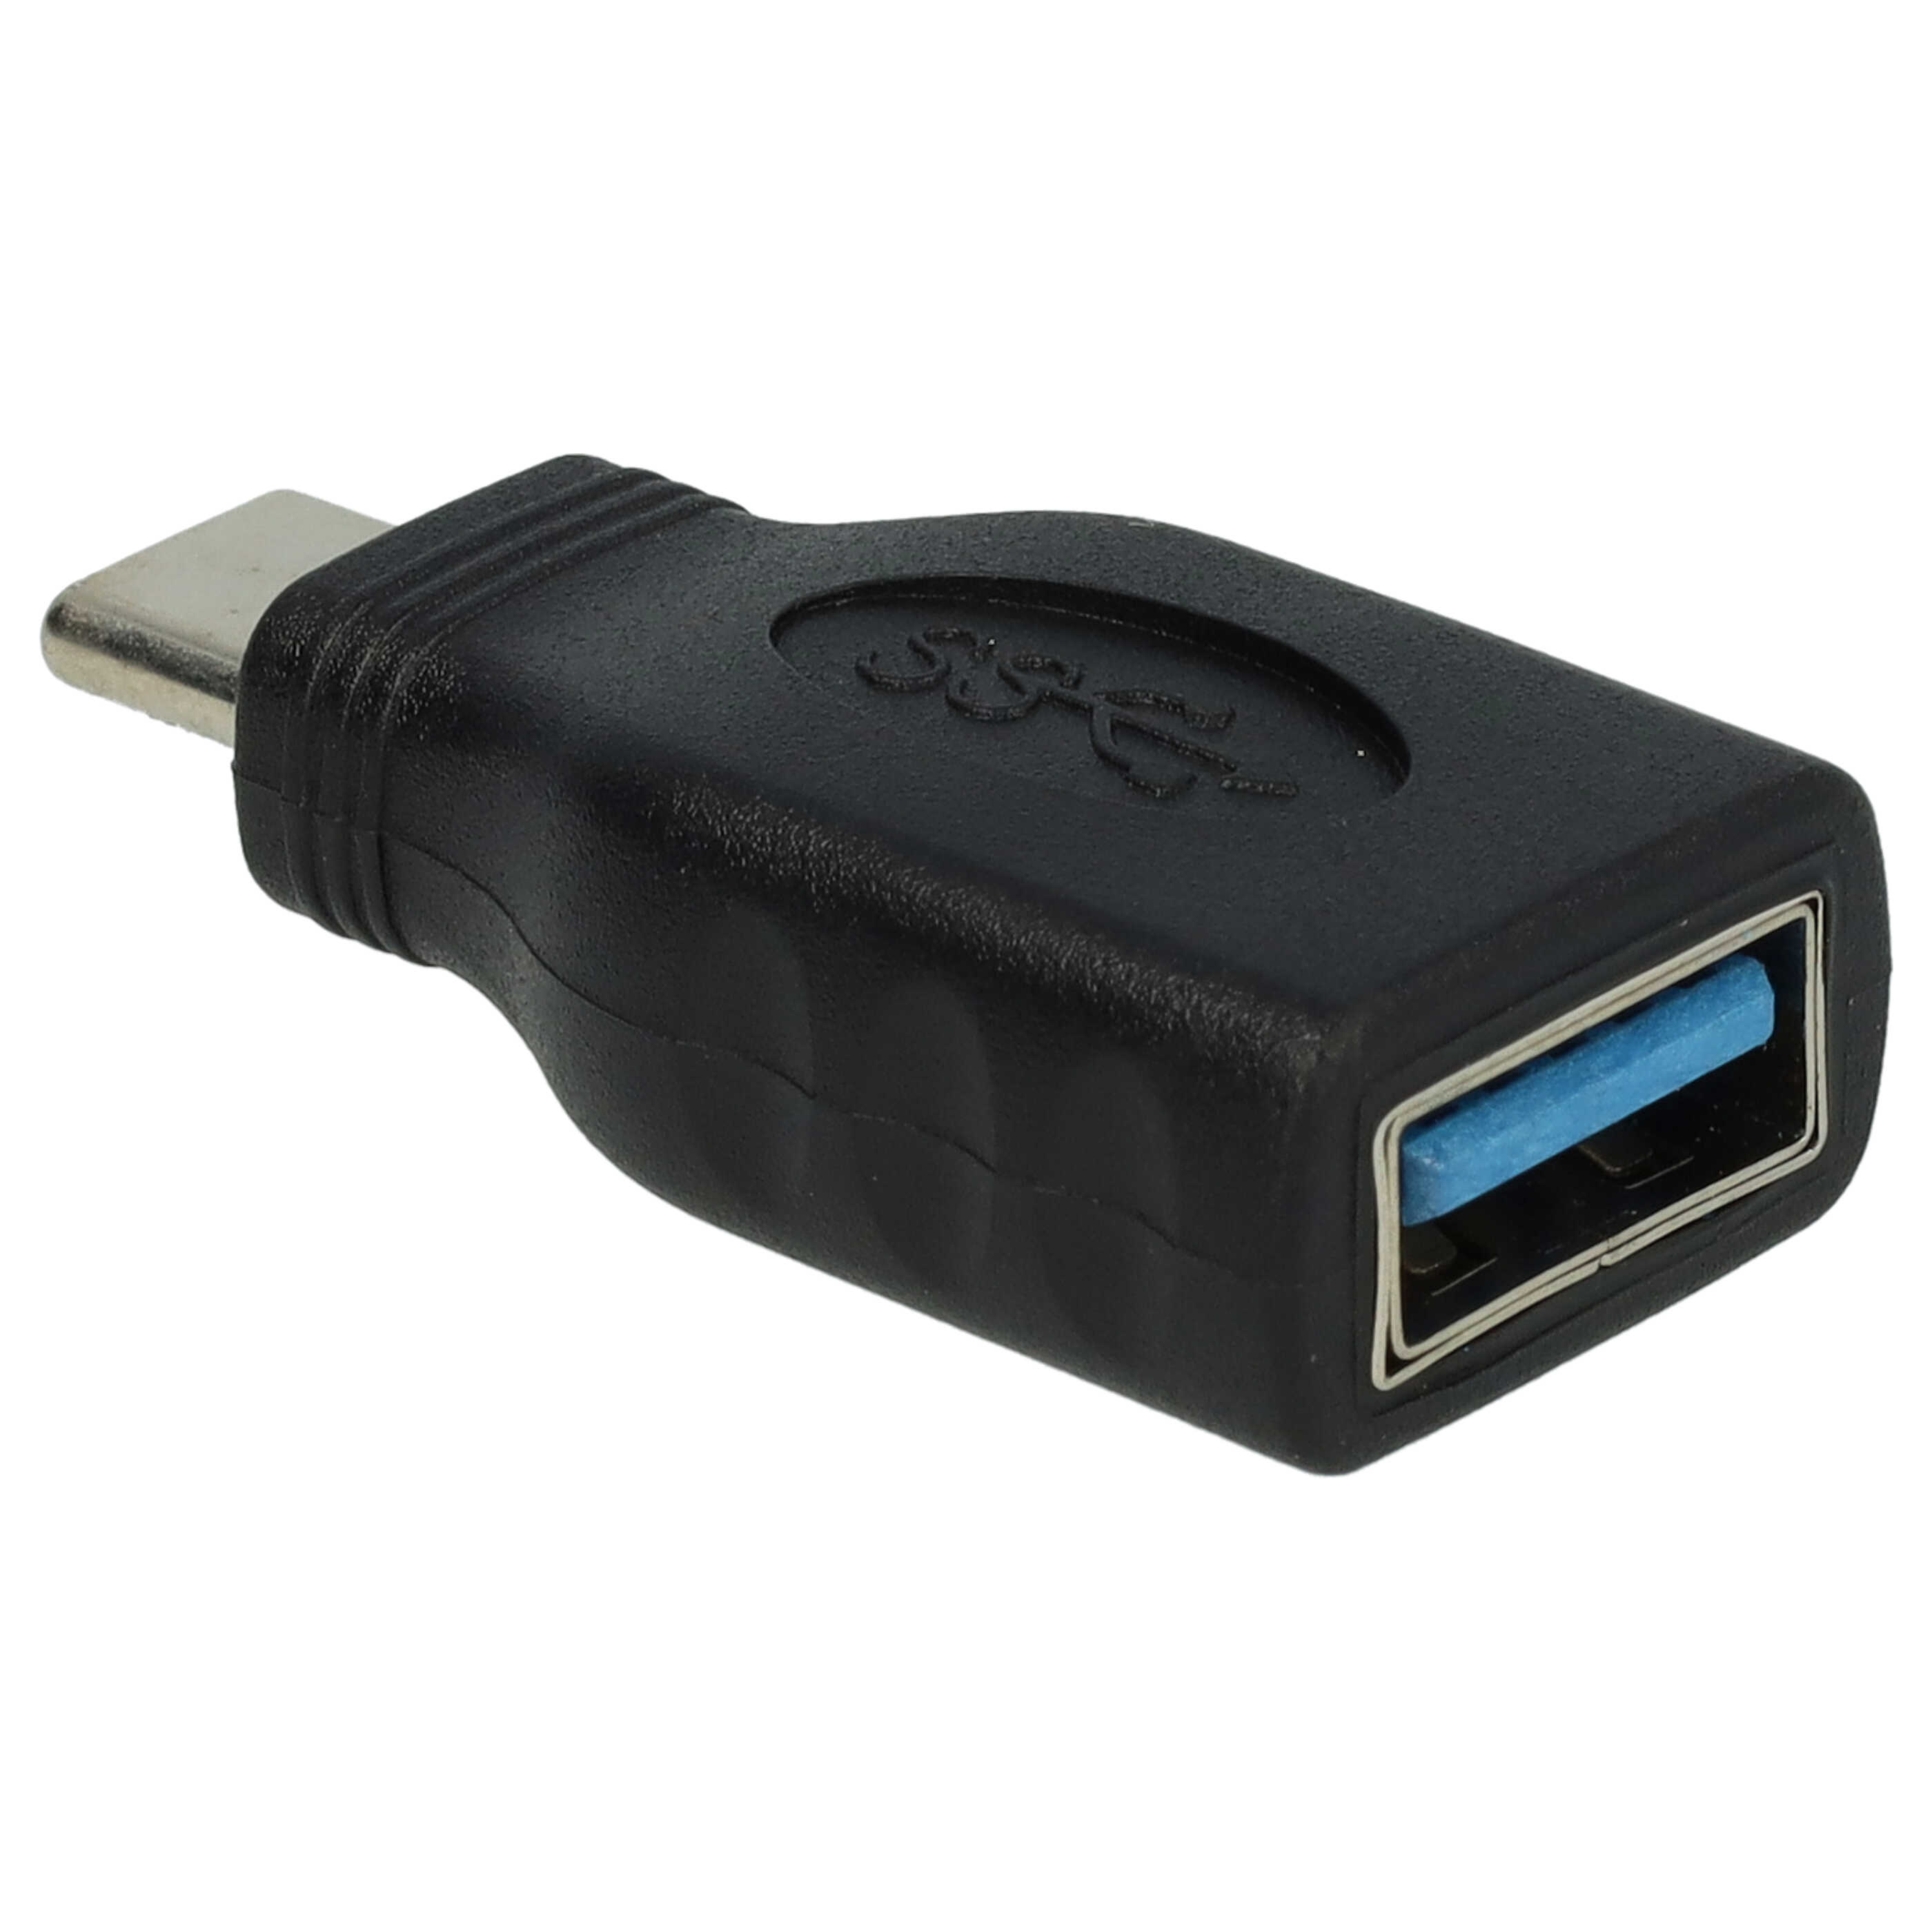 Adaptador USB C a USB 3.0 para smartphone, tablet por ej. compatible con Apple, Samsung Huawei, etc. - USB neg